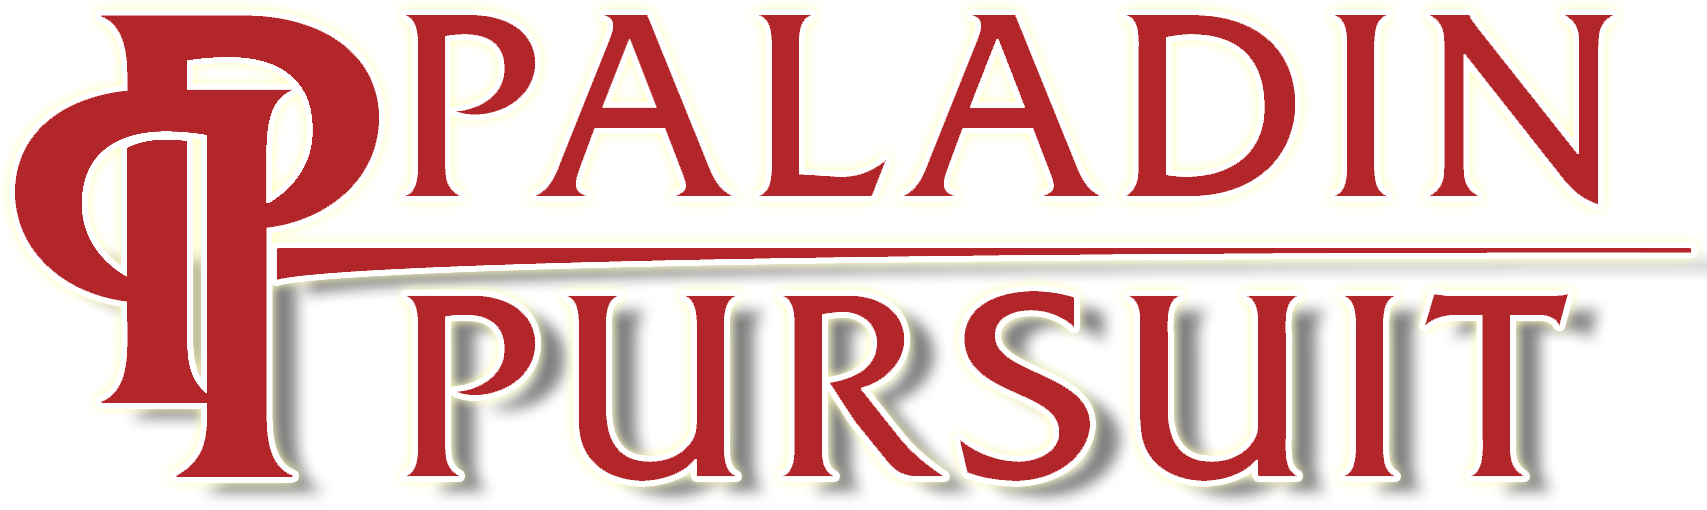 Paladin Pursuit, Inc. Logo